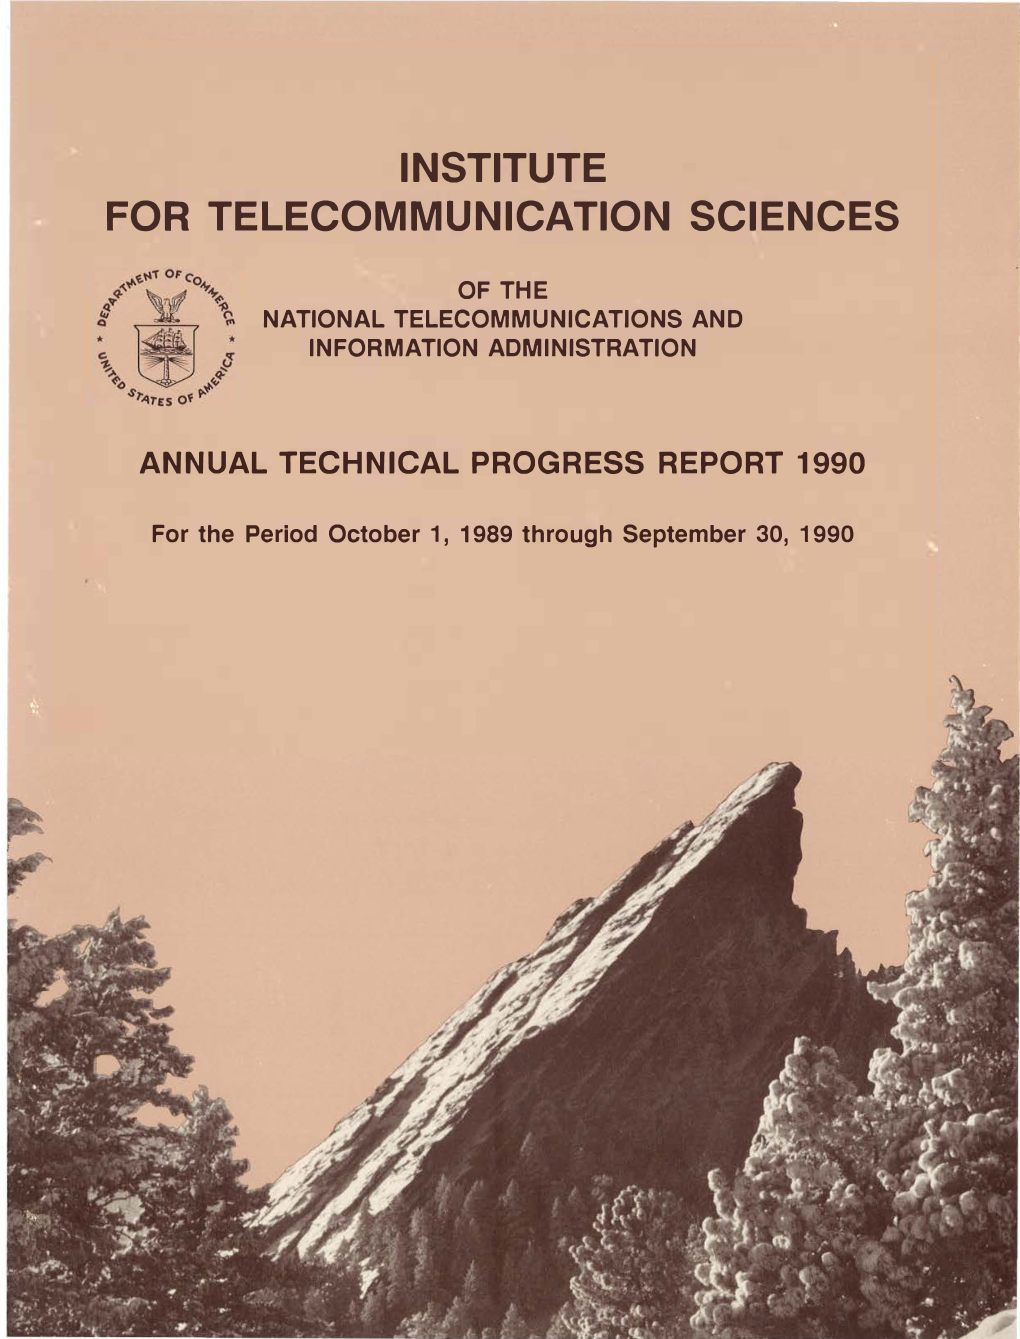 FY 1990 Technical Progress Report